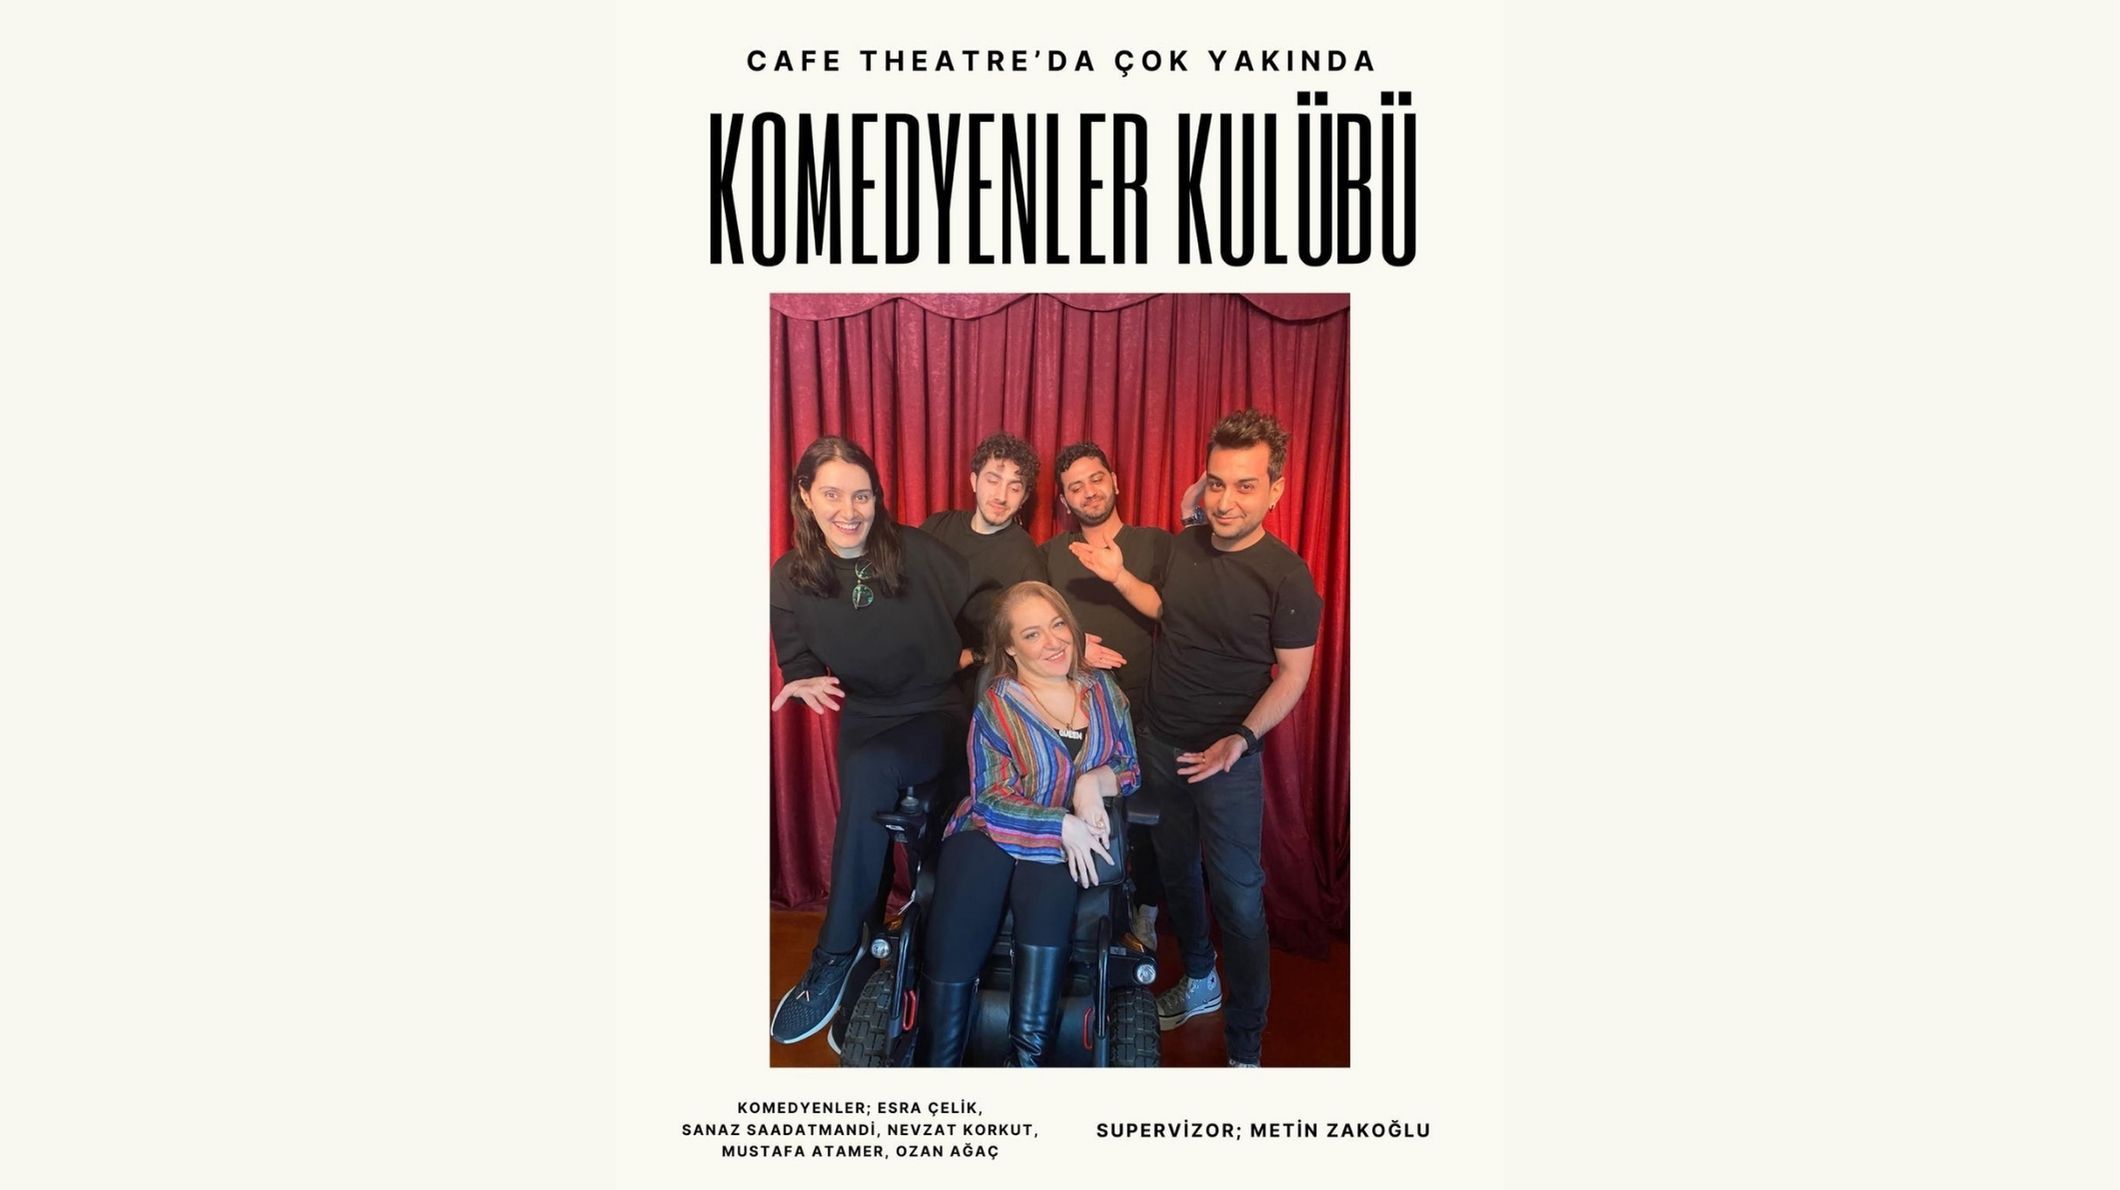 Komedyenler Kulübü - Cafe Theatre Kartal İSTMarina - İstanbul